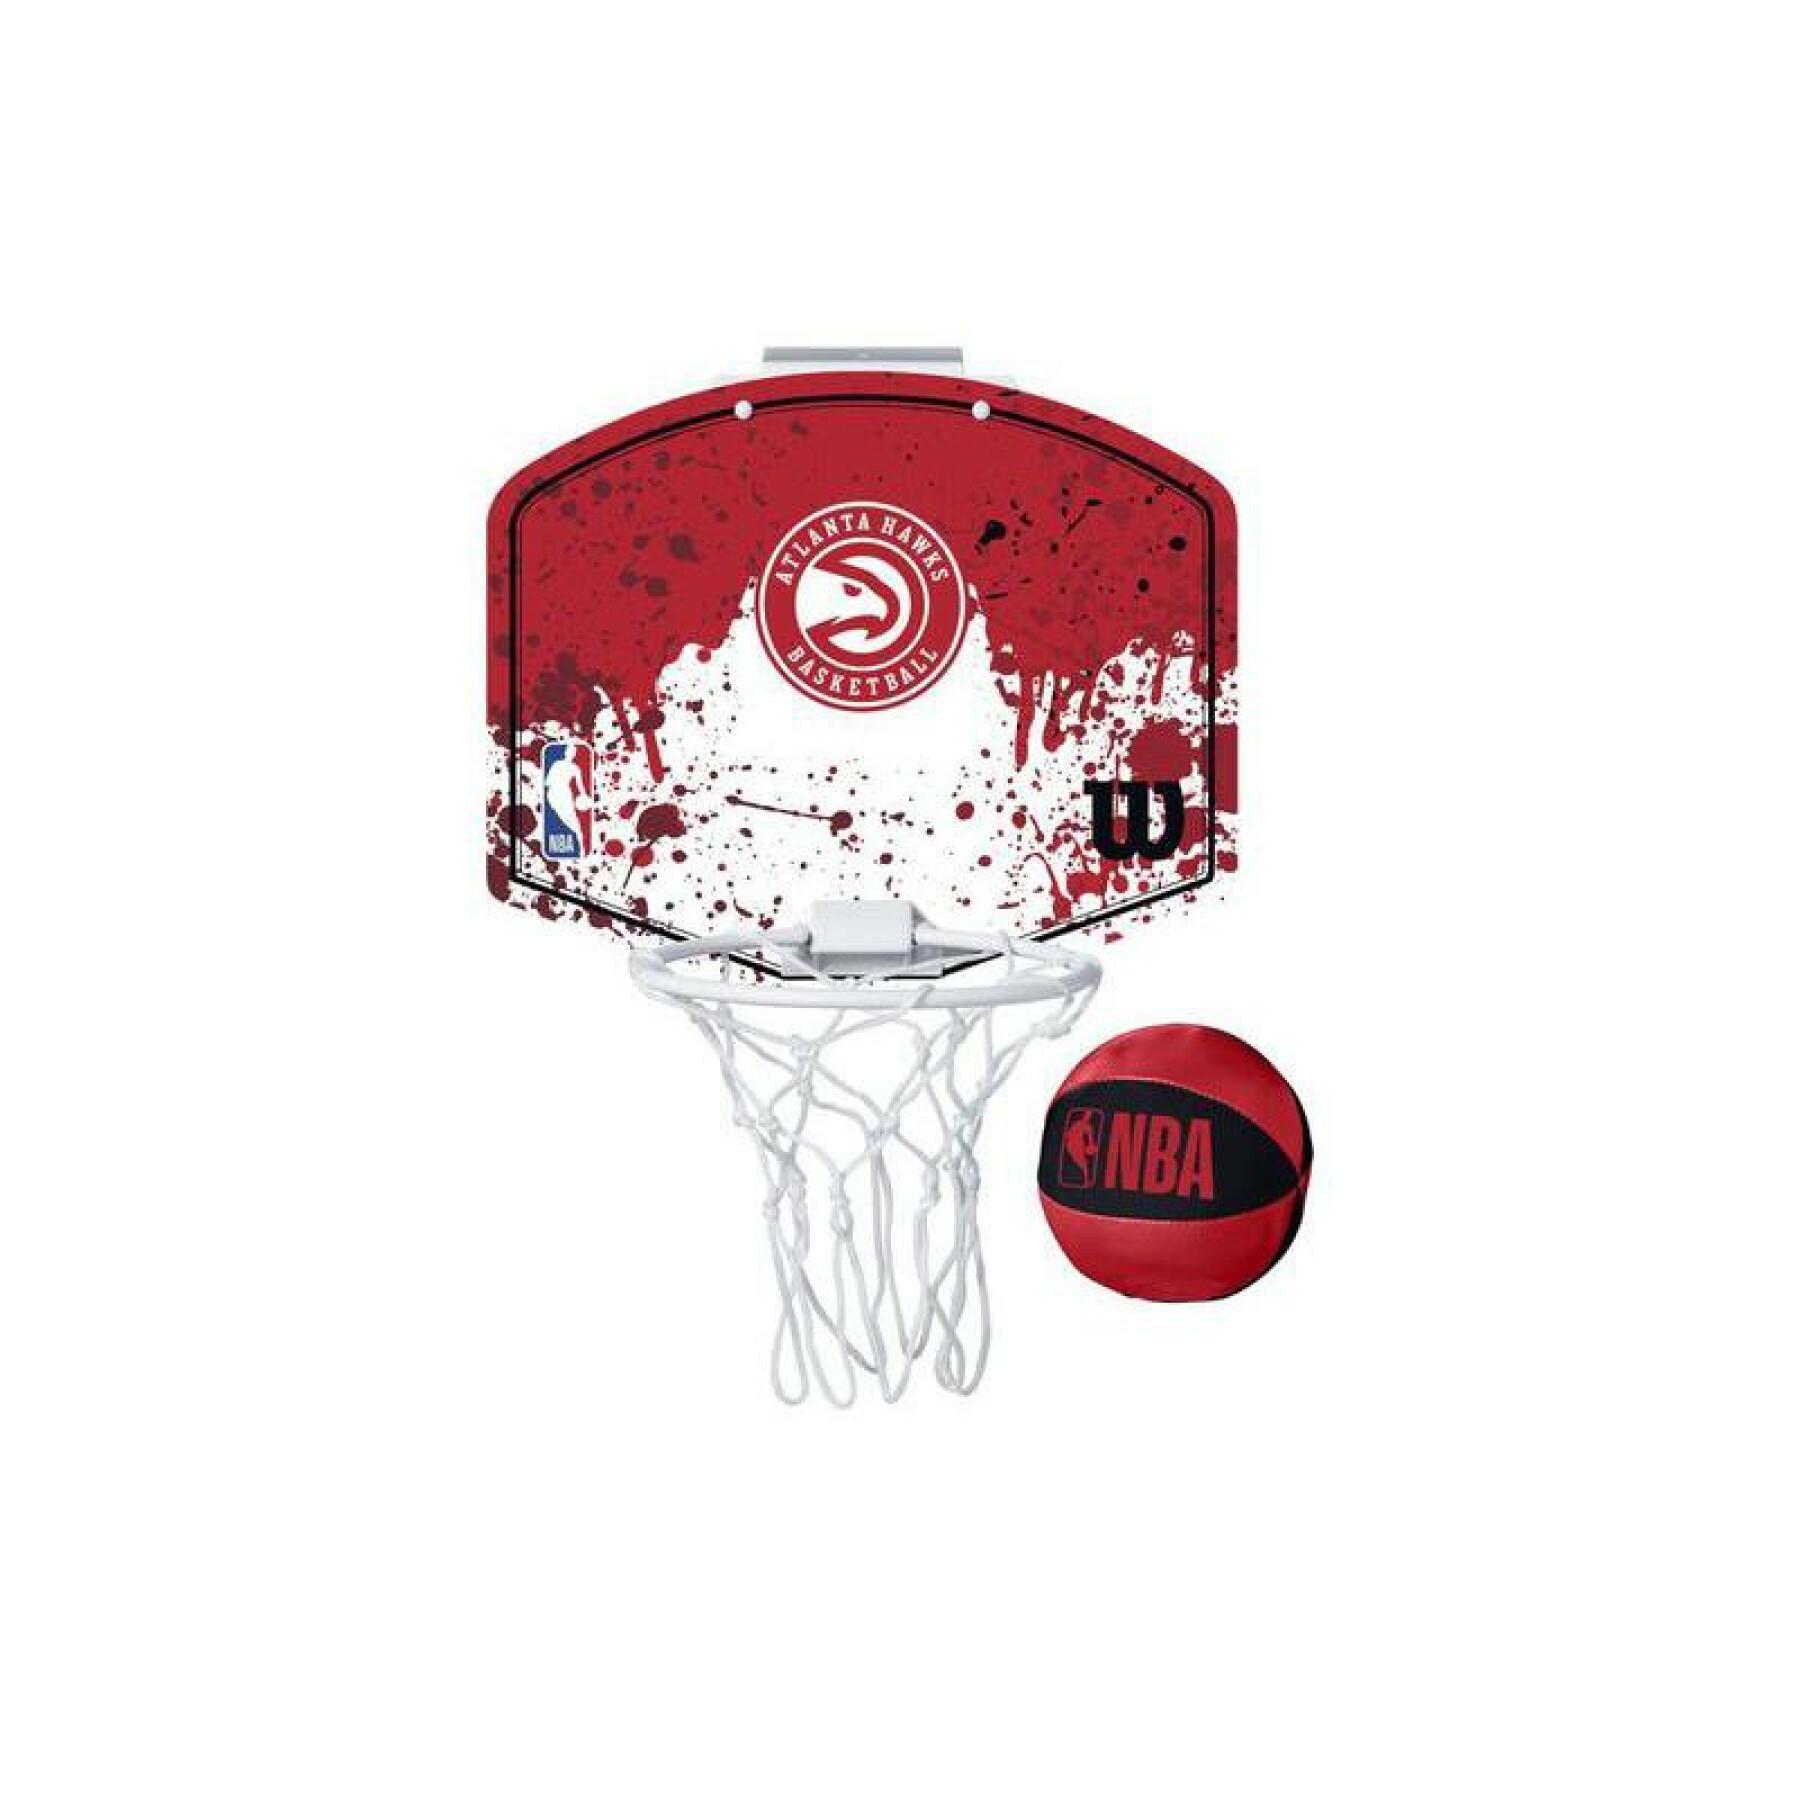 Mini NBA Basketballkorb Atlanta Hawks